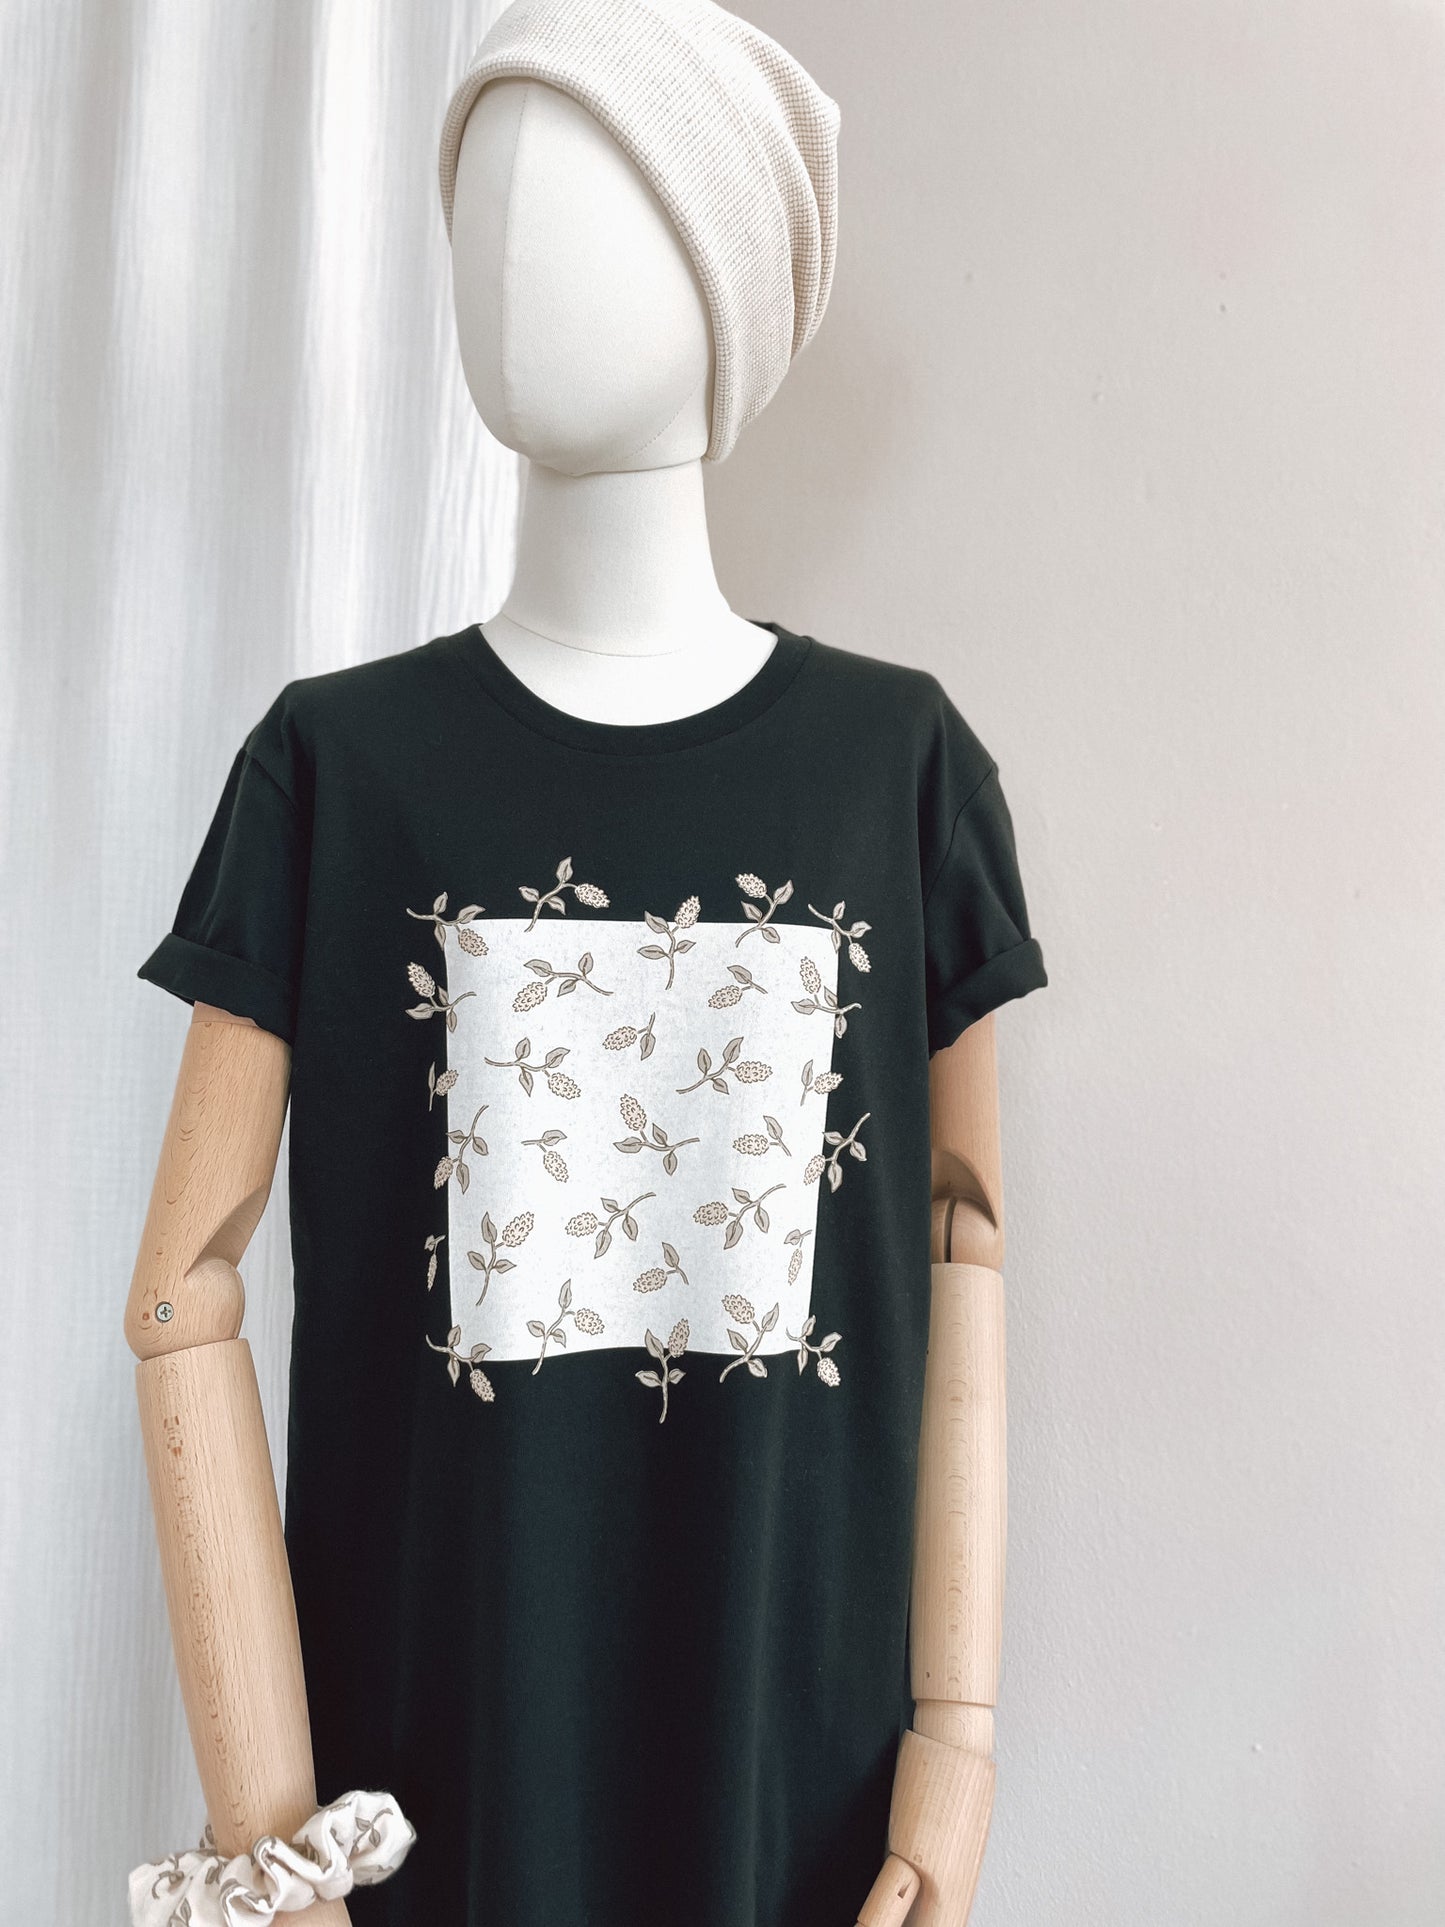 T-shirt dress / just floral / black